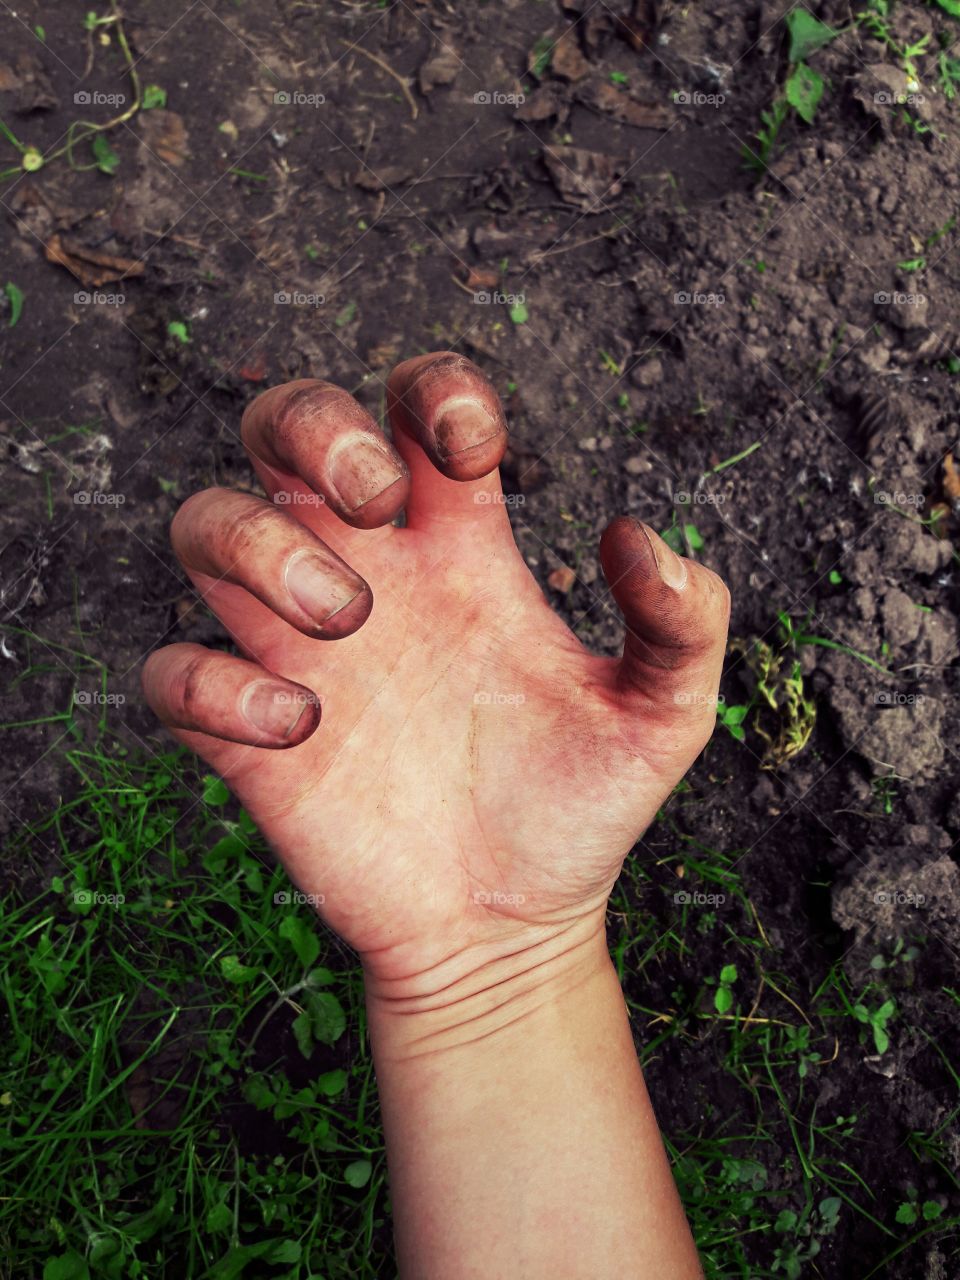 dirty gardening hands mud fingers